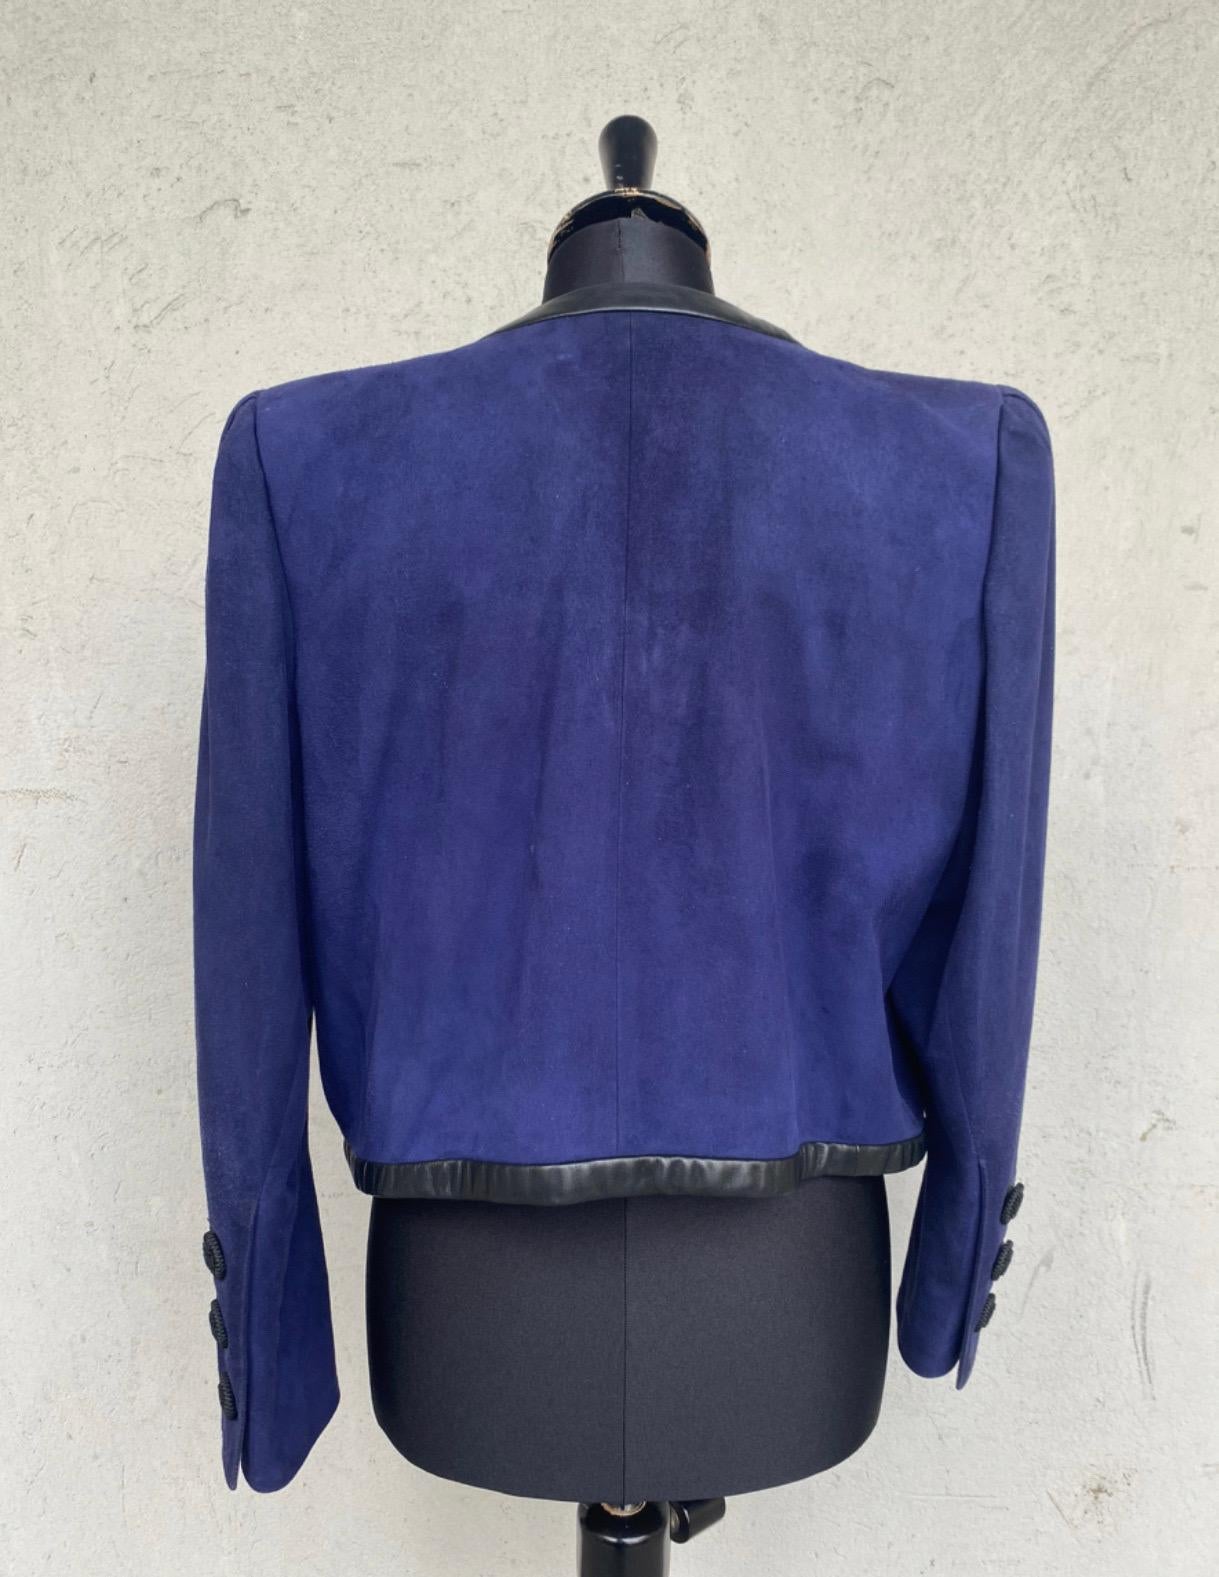 Vintage Yves Saint Laurent jacket in purple/blue suede leather( velvet lamb) indicative size: 42 Italian, measurements: shoulder 42 cm, length 50 cm, chest 54 cm, sleeve 53 cm, normal condition of a vintage garment, used but in good condition